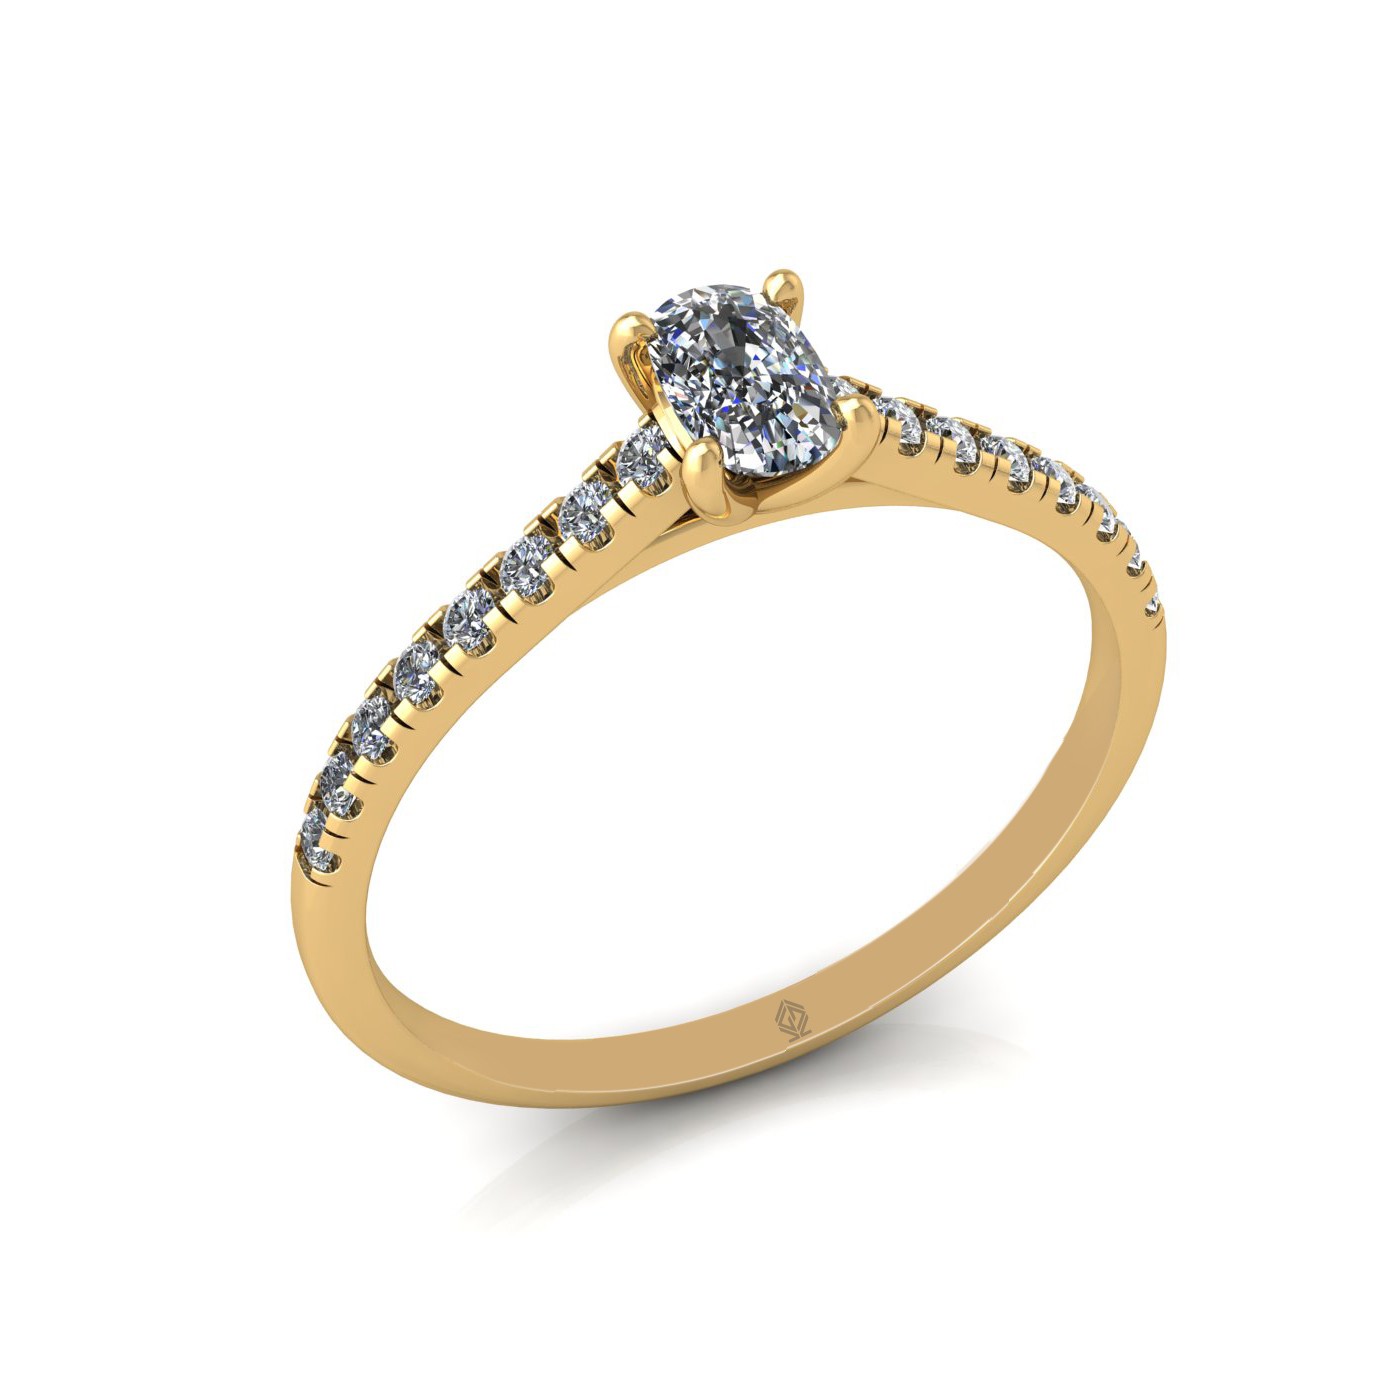 18k yellow gold  4 prongs elongated cushion cut diamond engagement ring with whisper thin pavÉ set band